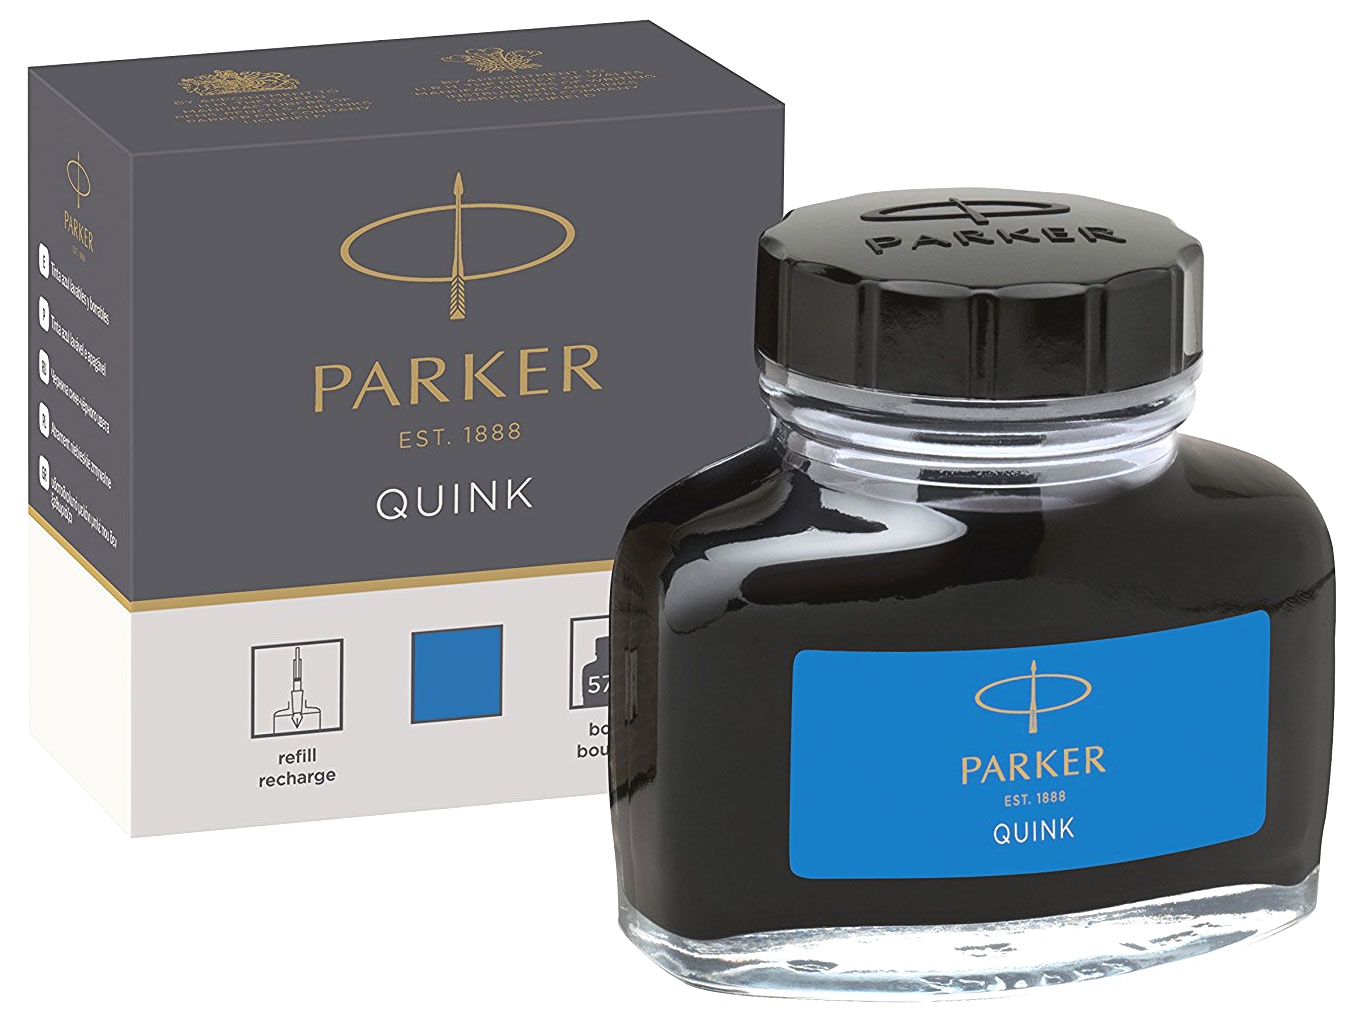  Флакон с неводостойкими синими чернилами (Washable Blue) Parker, Bottle Quink Z13